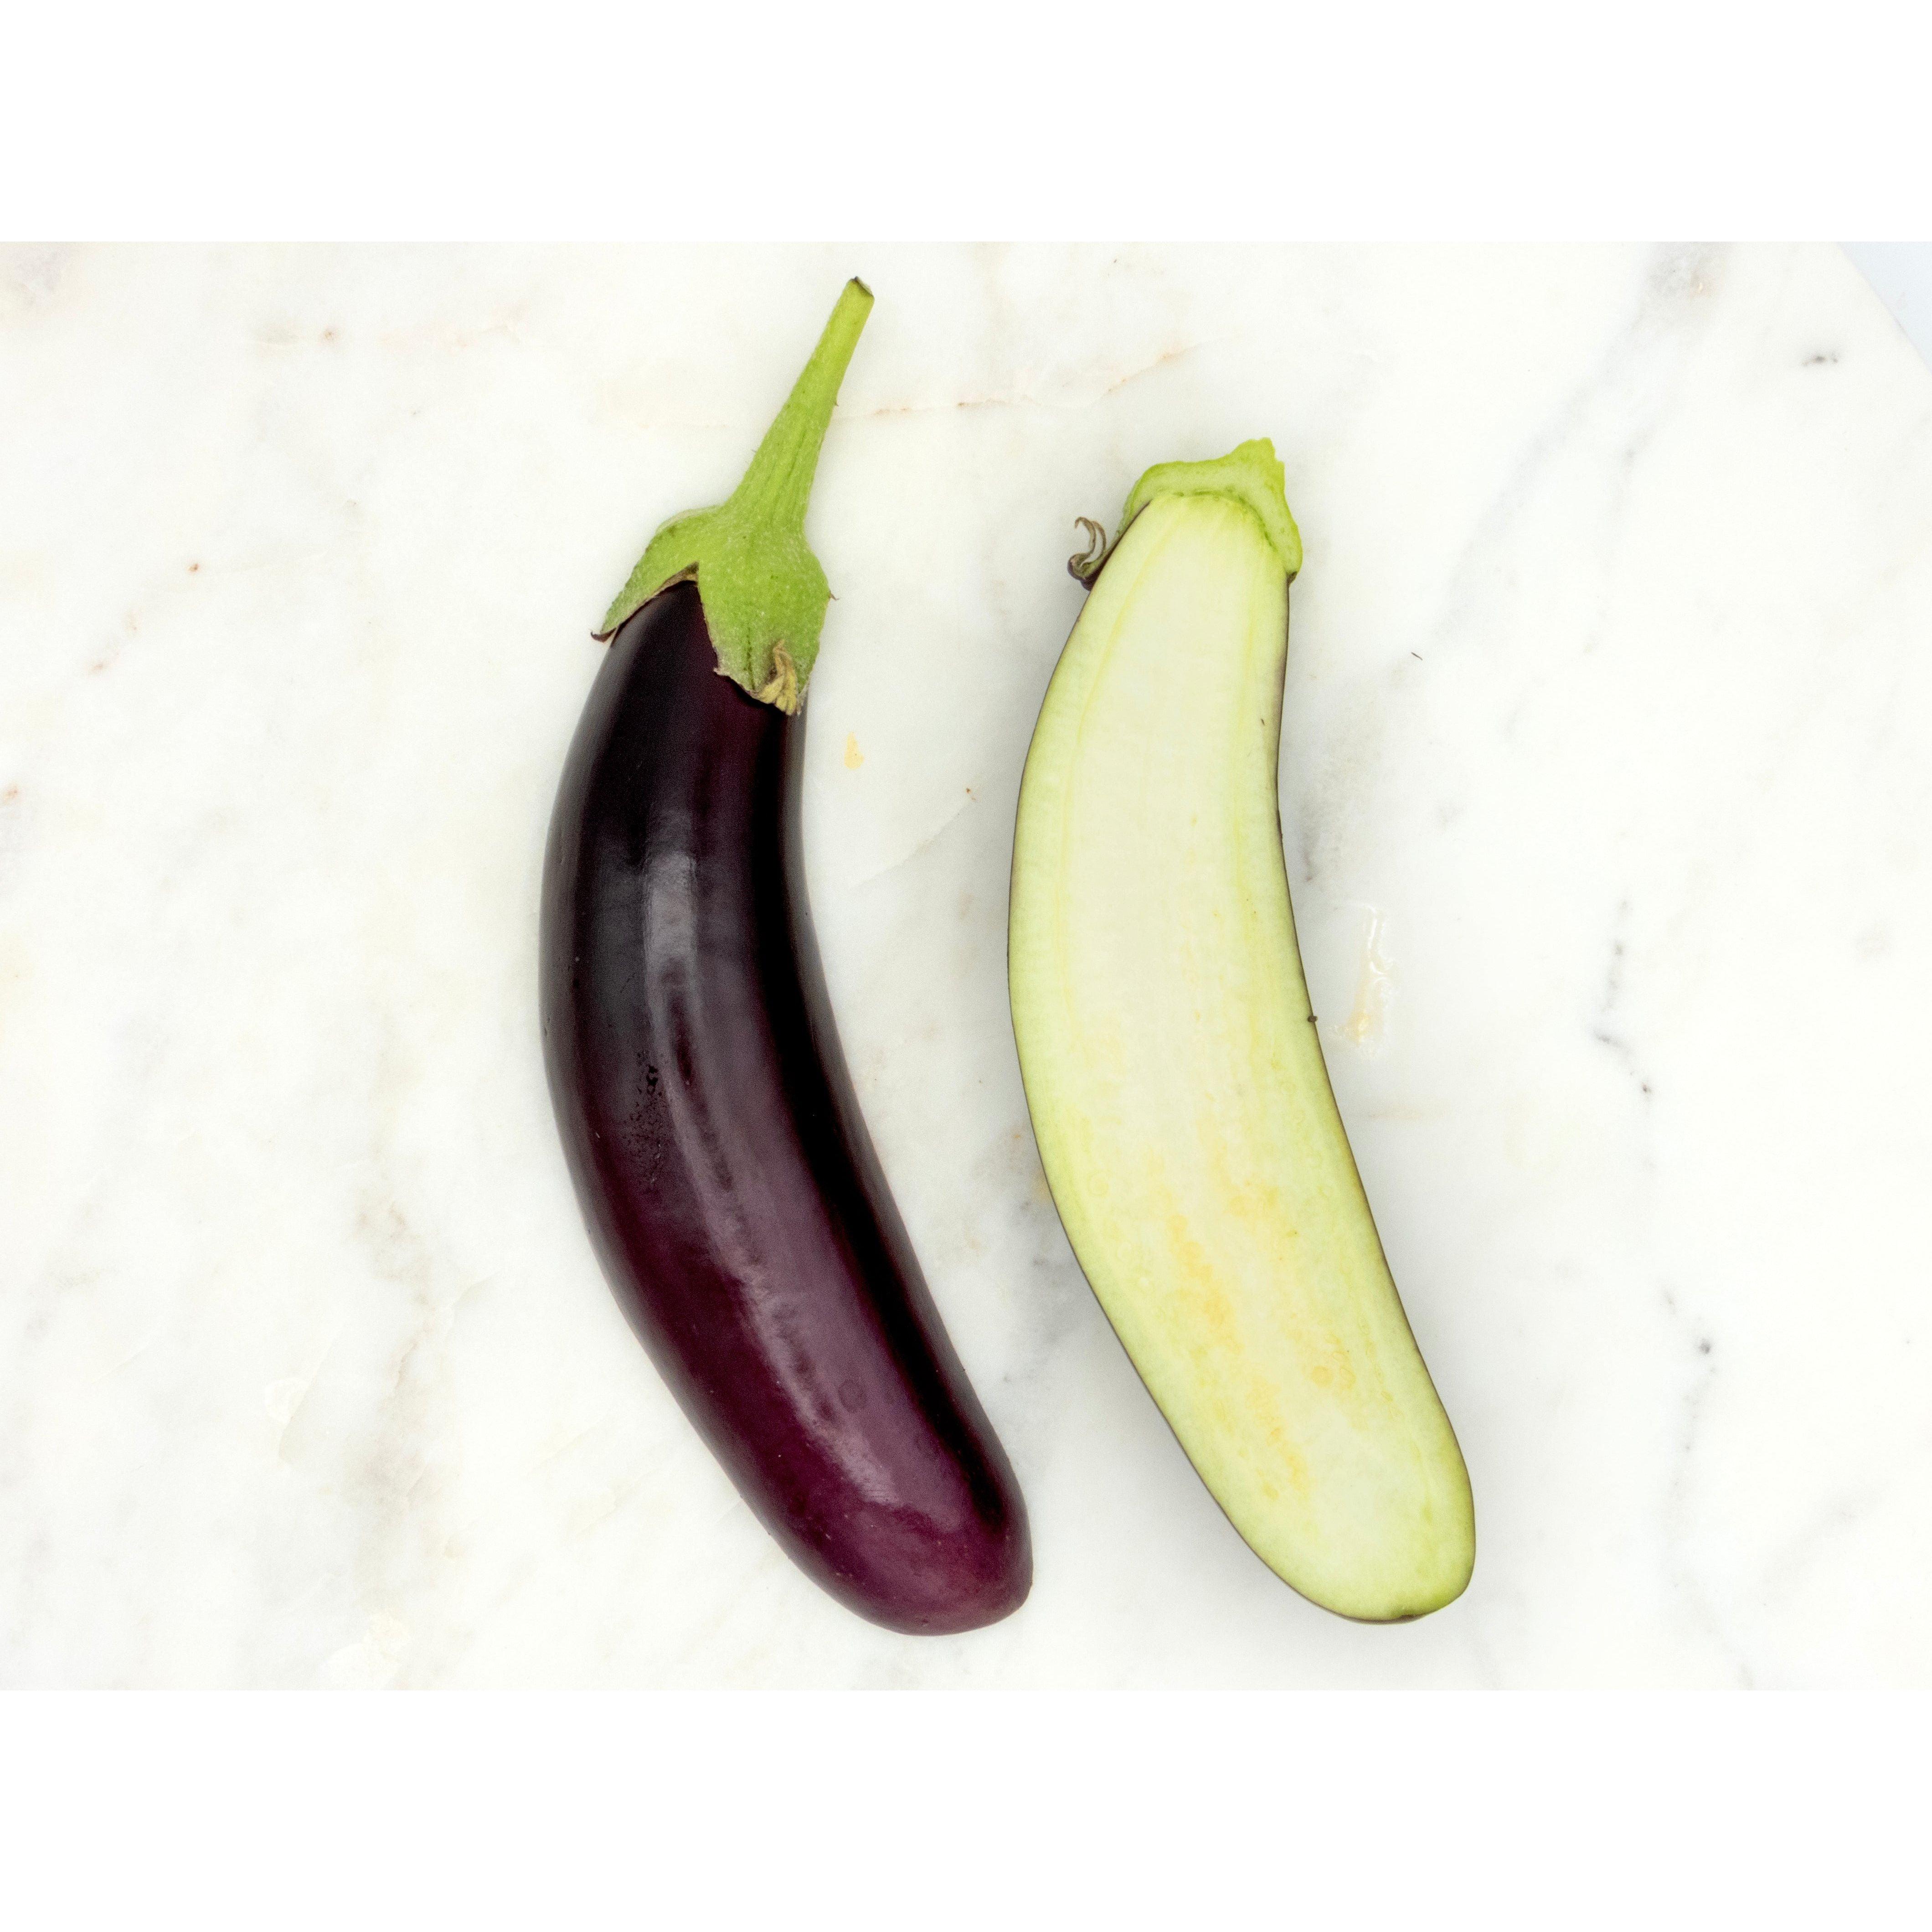 Soil-Grown Eggplant - Nutrient Farm